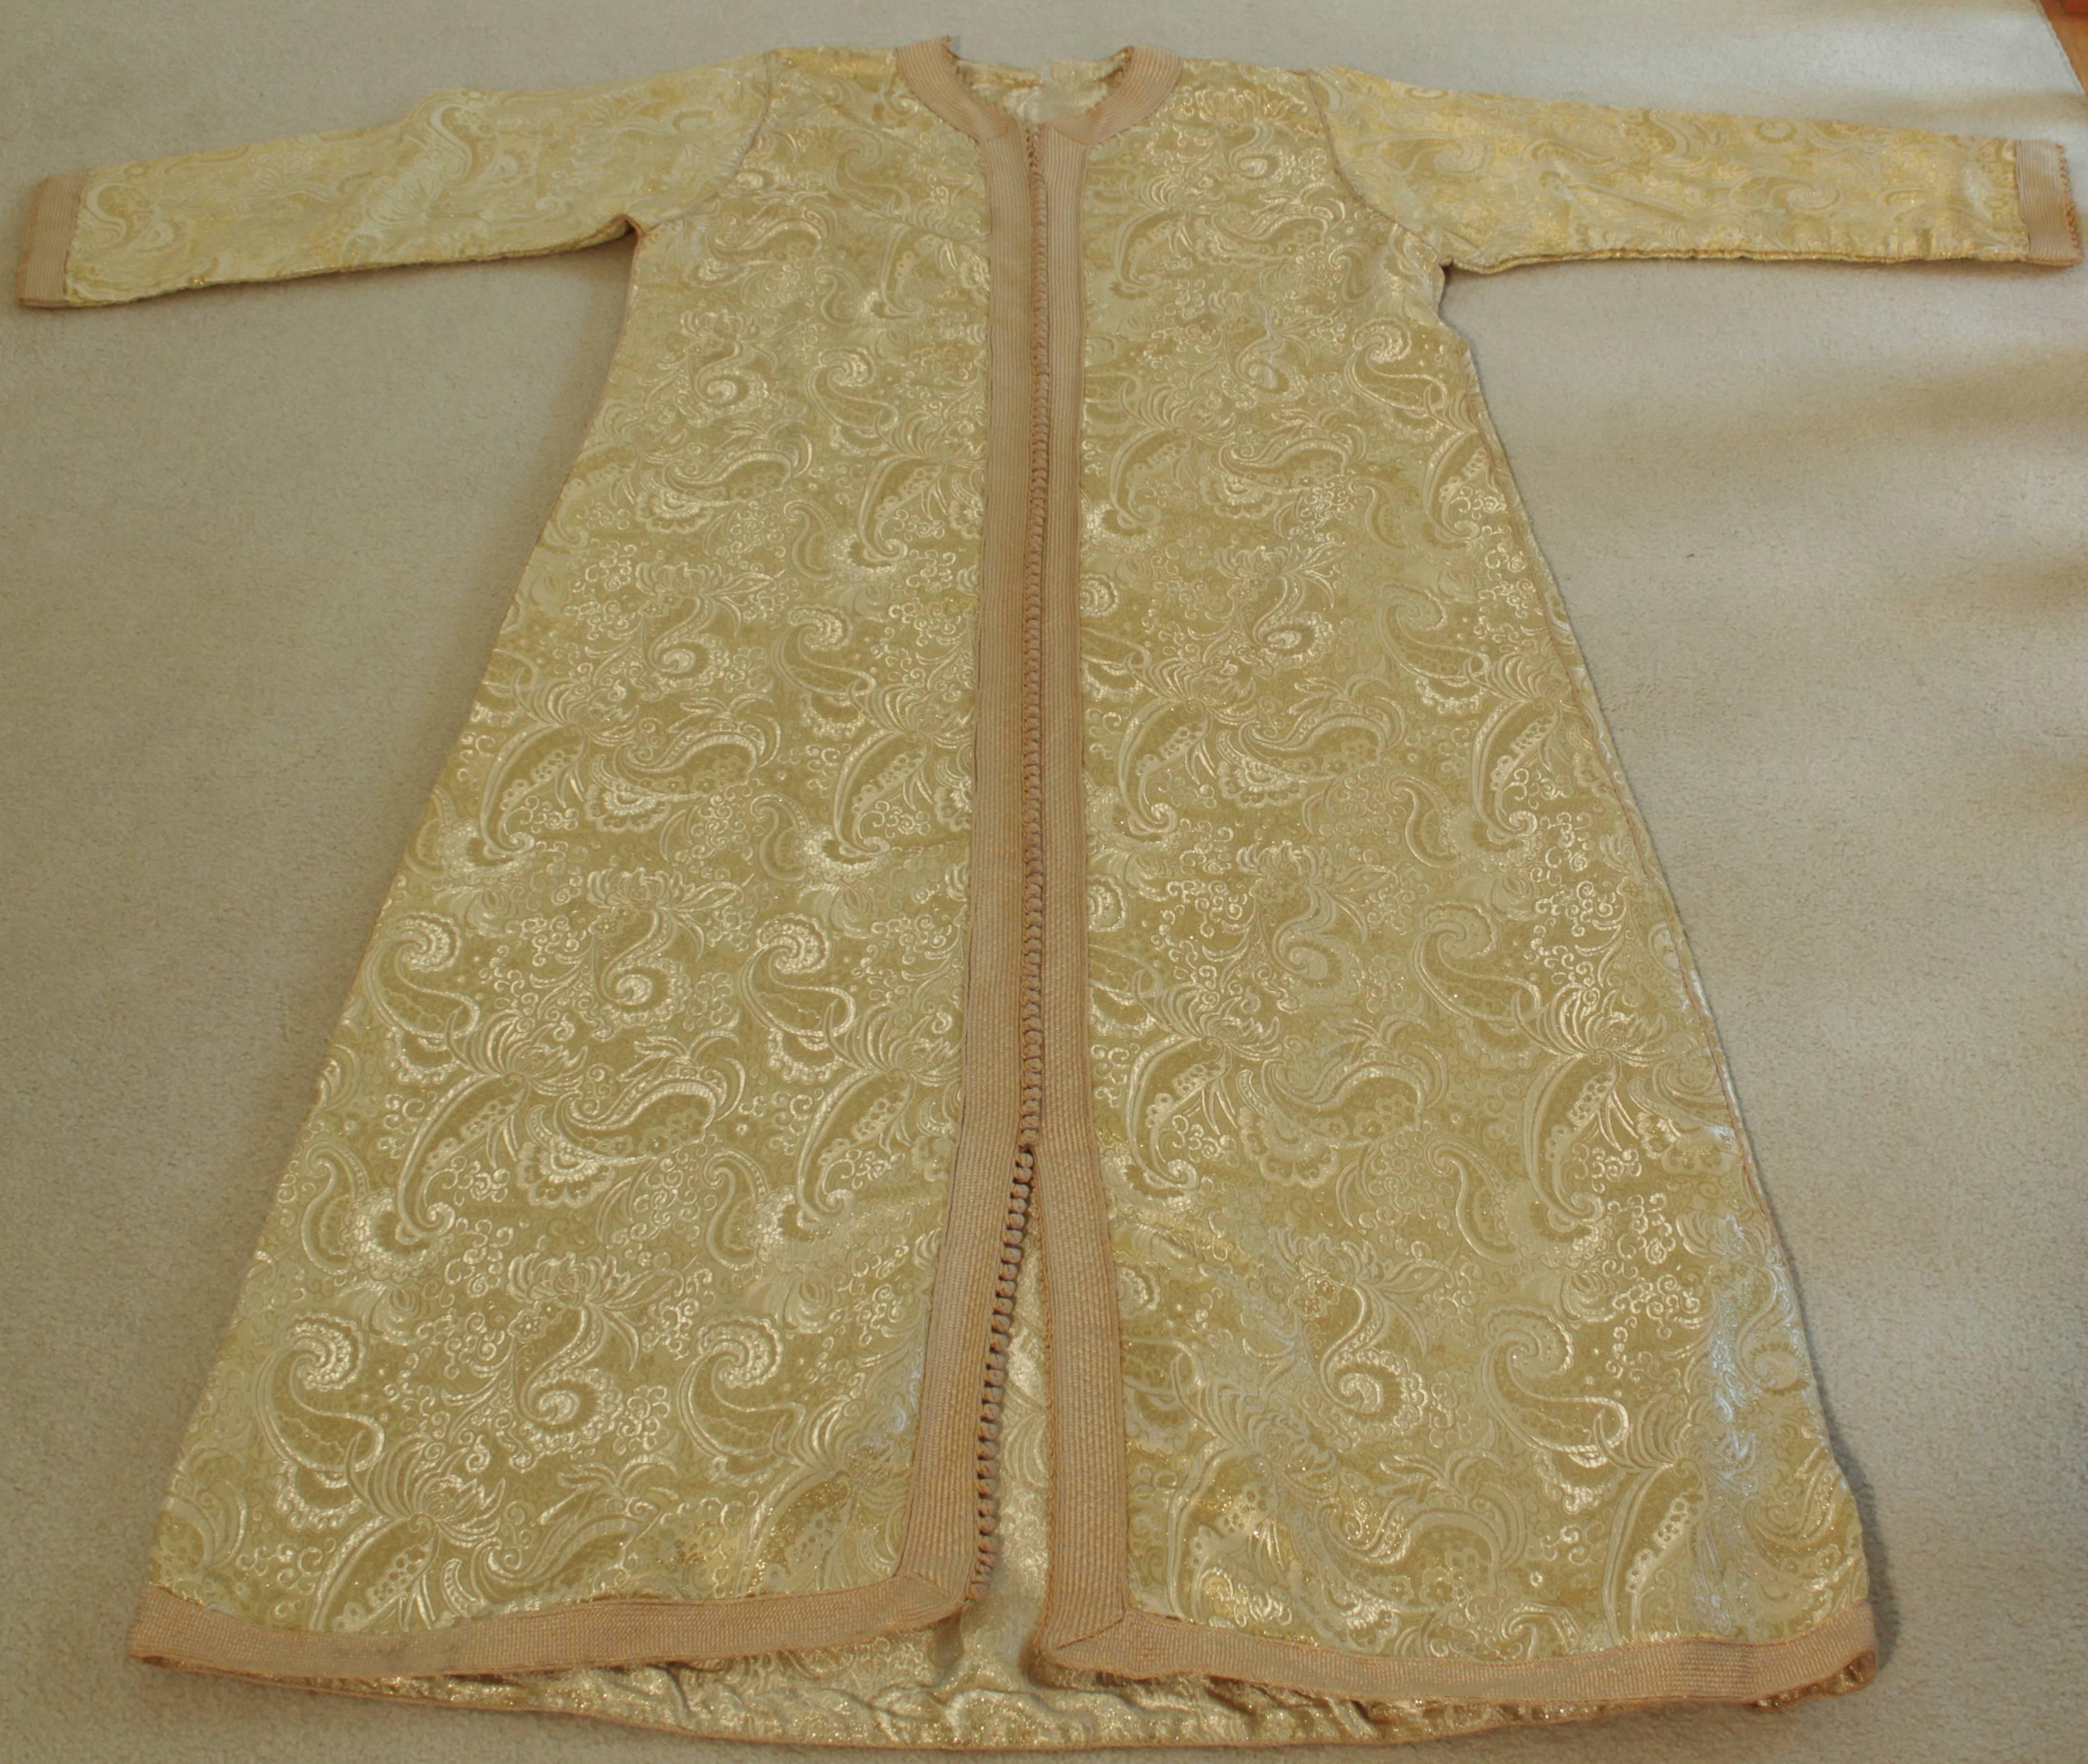 Robe caftan marocaine vintage exotique en brocart métallique, circa 1970.
Le luxueux caftan mauresque est conçu avec de l'or brillant et du brocart métallique vert et de la broderie verte.
L'avant de l'élégante robe caftan est orné à l'avant de